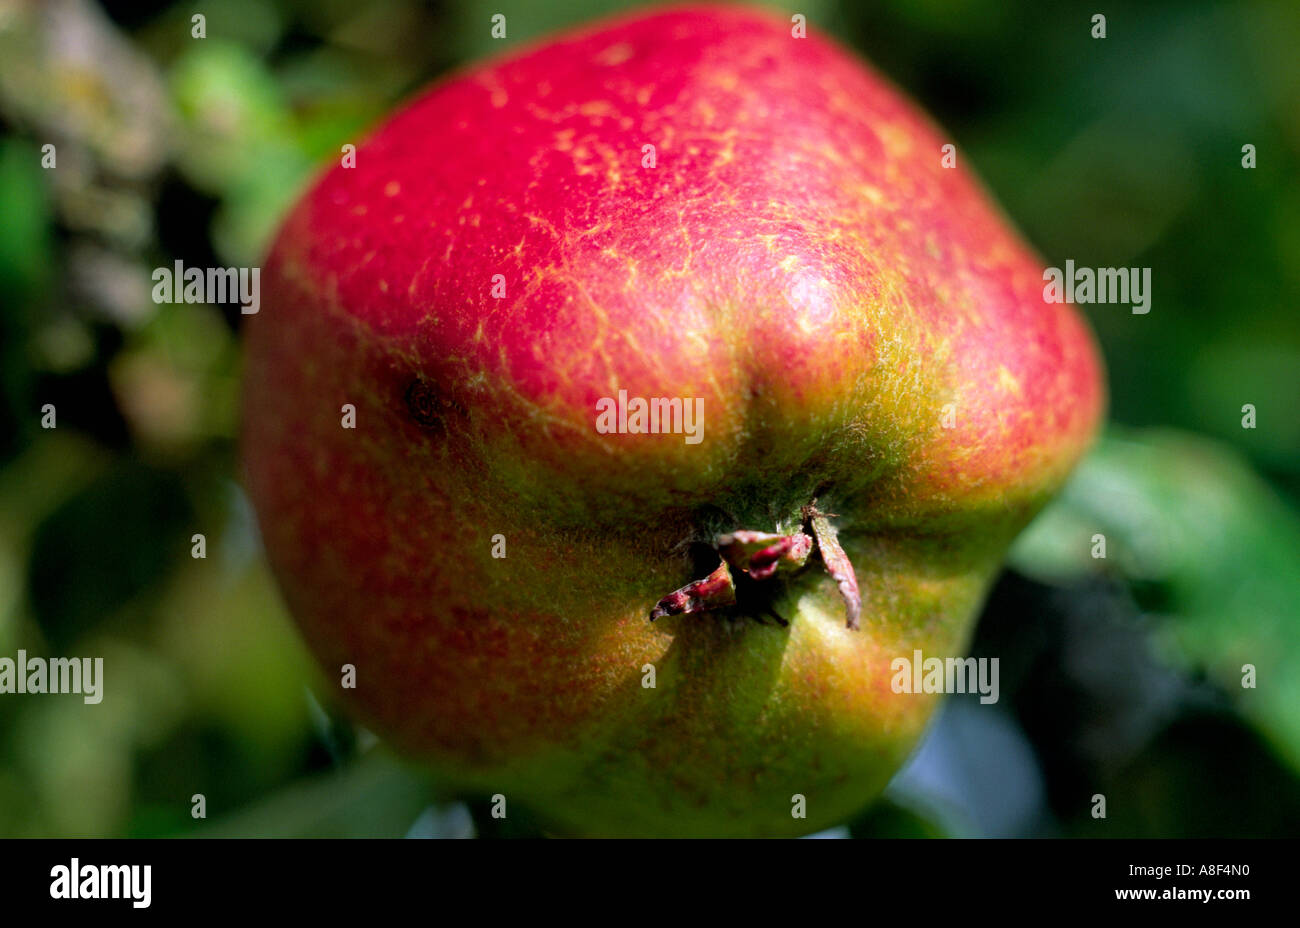 Apple Stock Photo